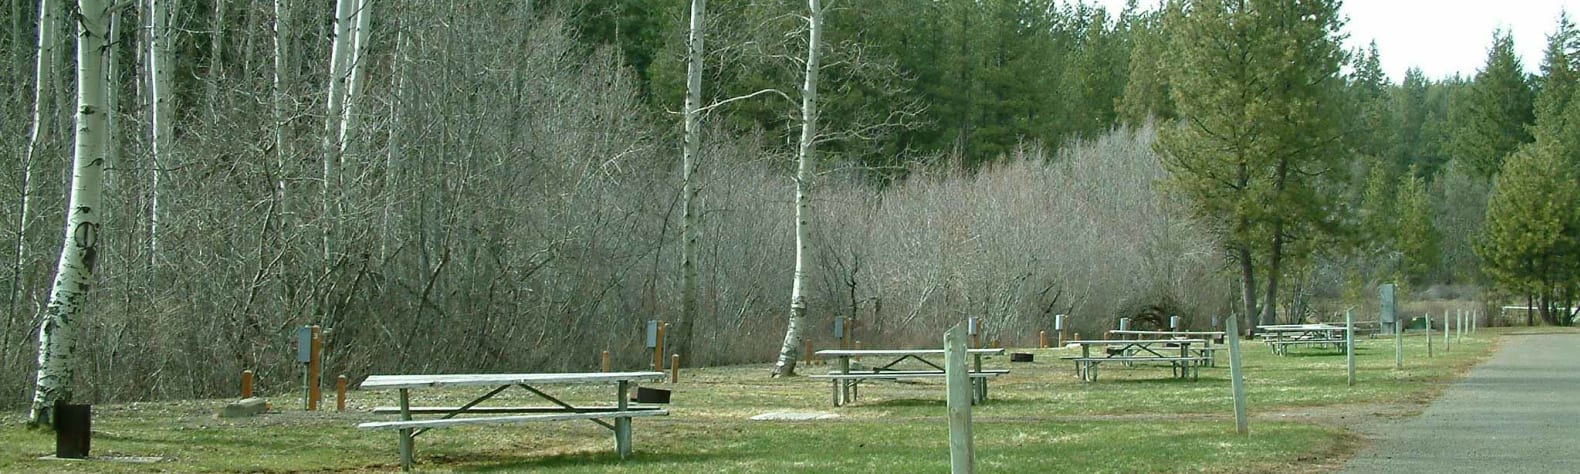 Brooks Memorial State Park